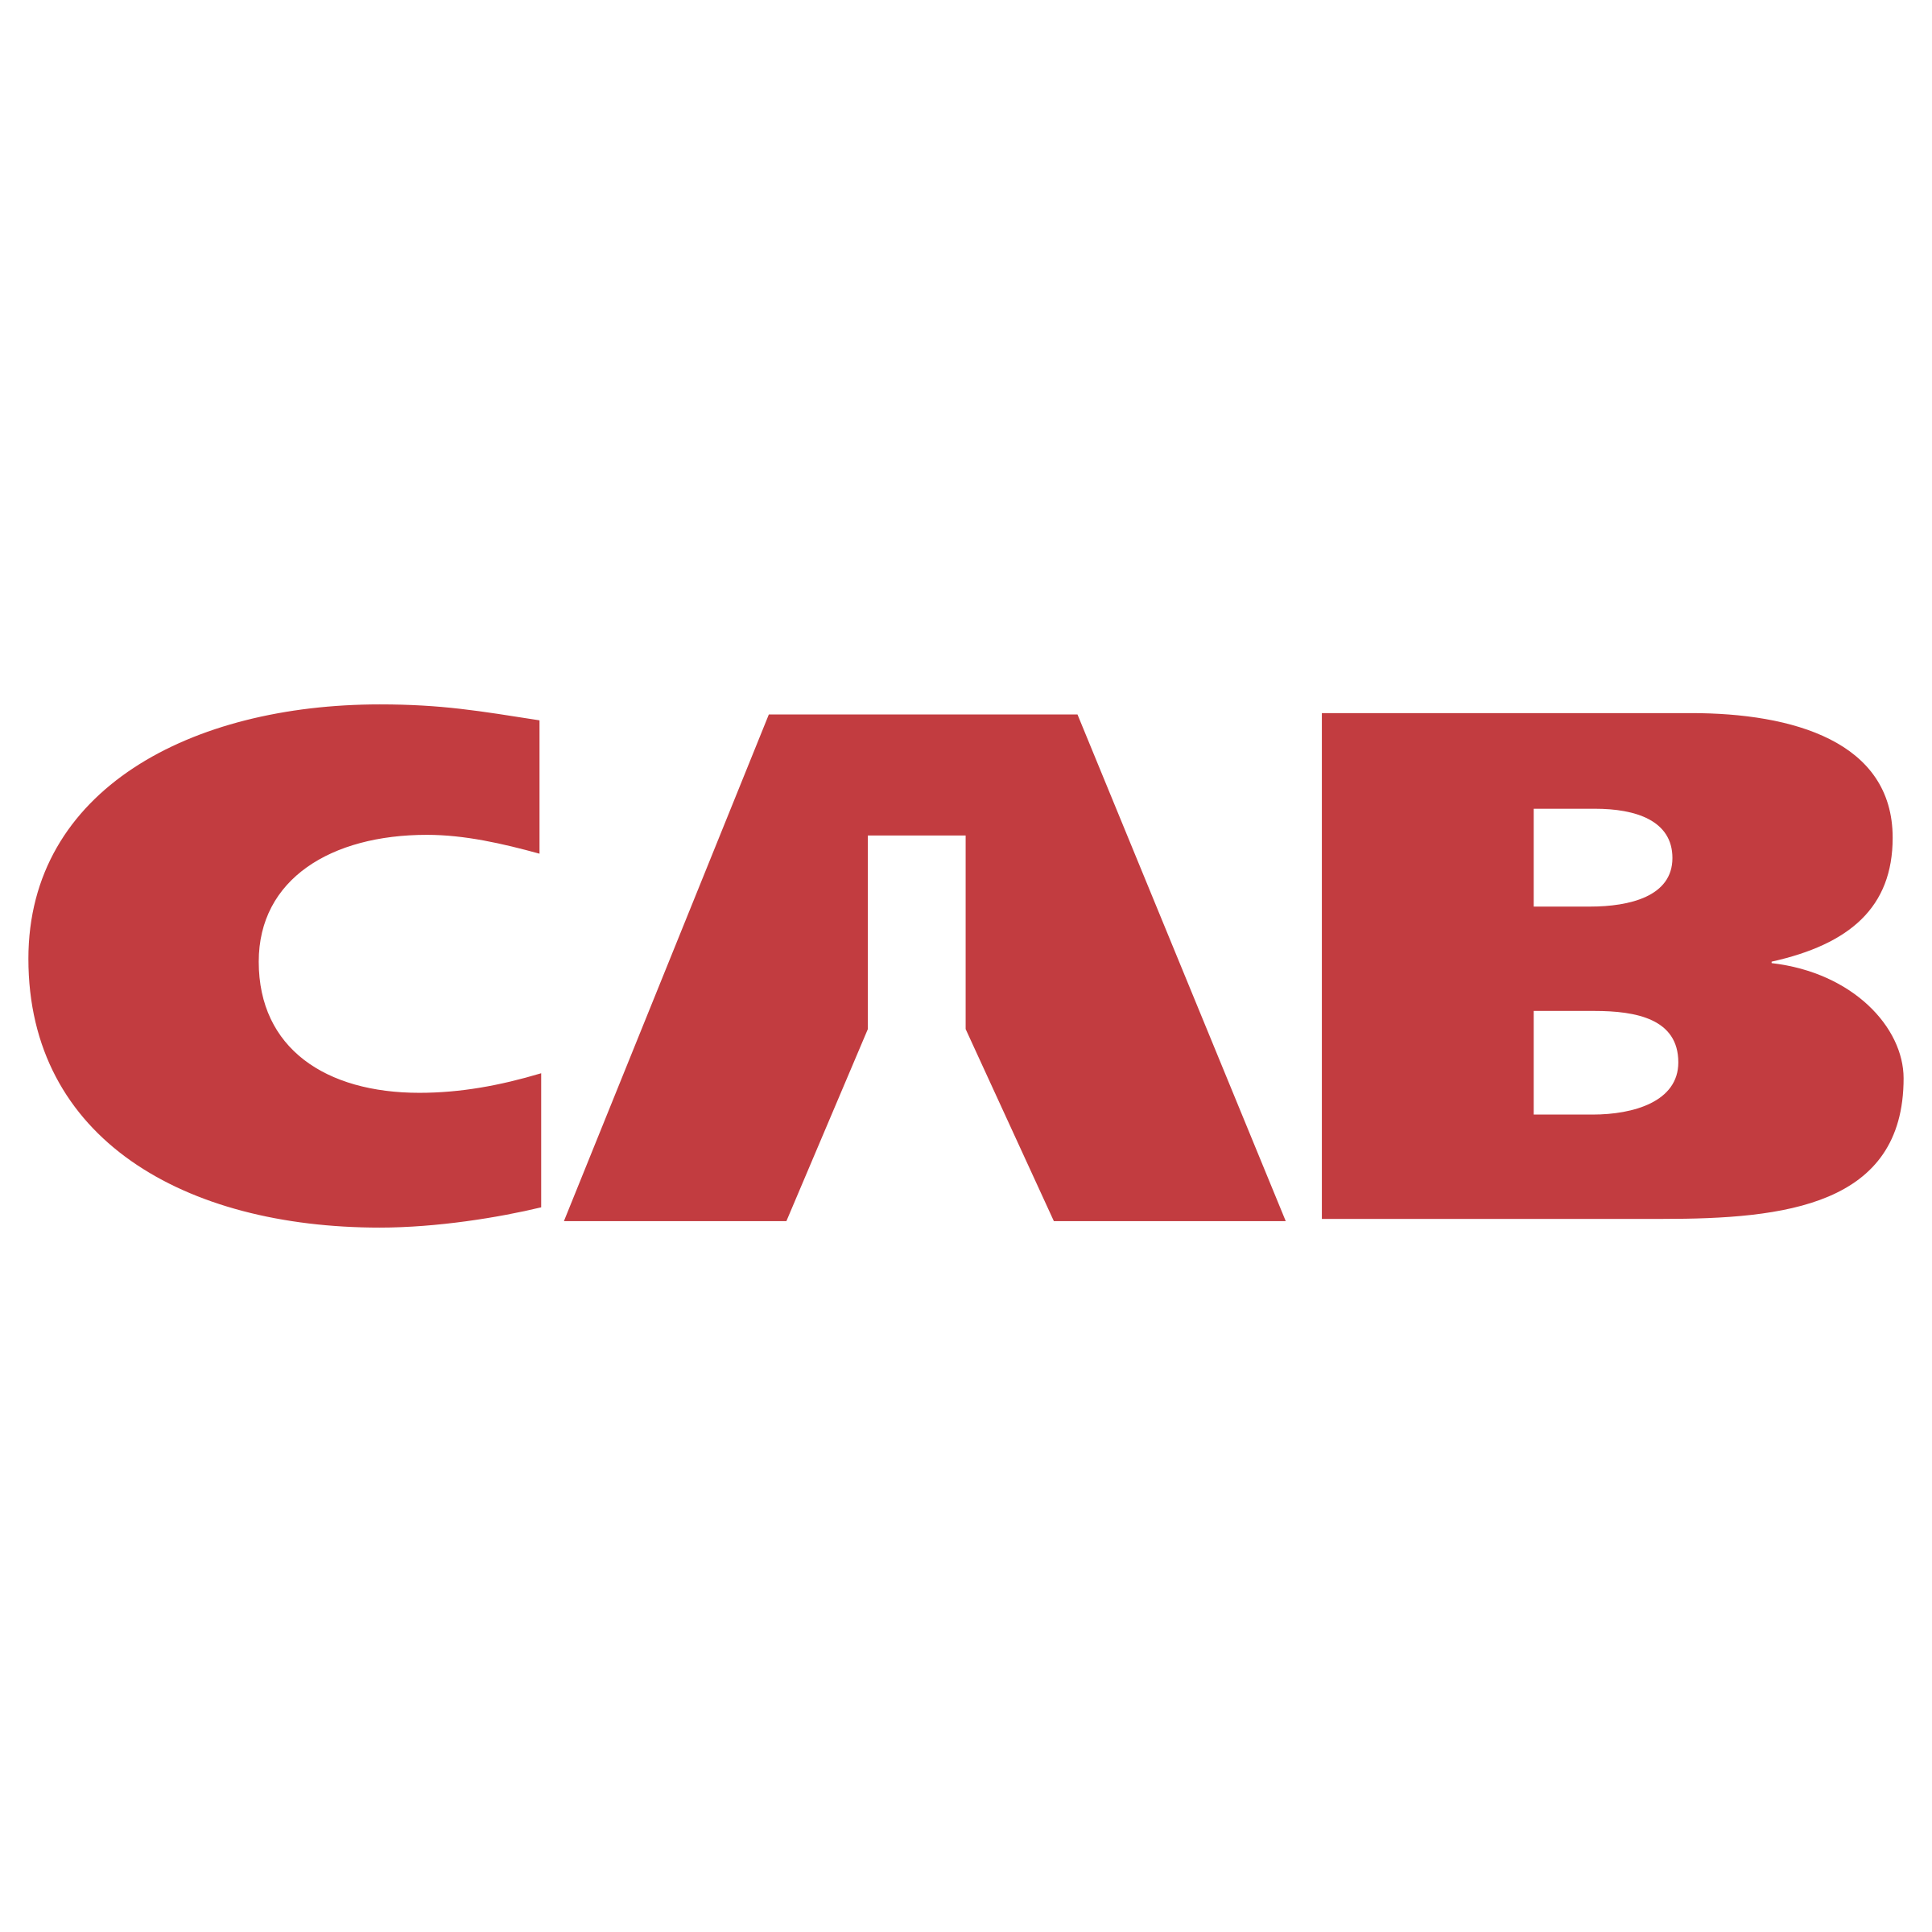 cab-logo-png-transparent